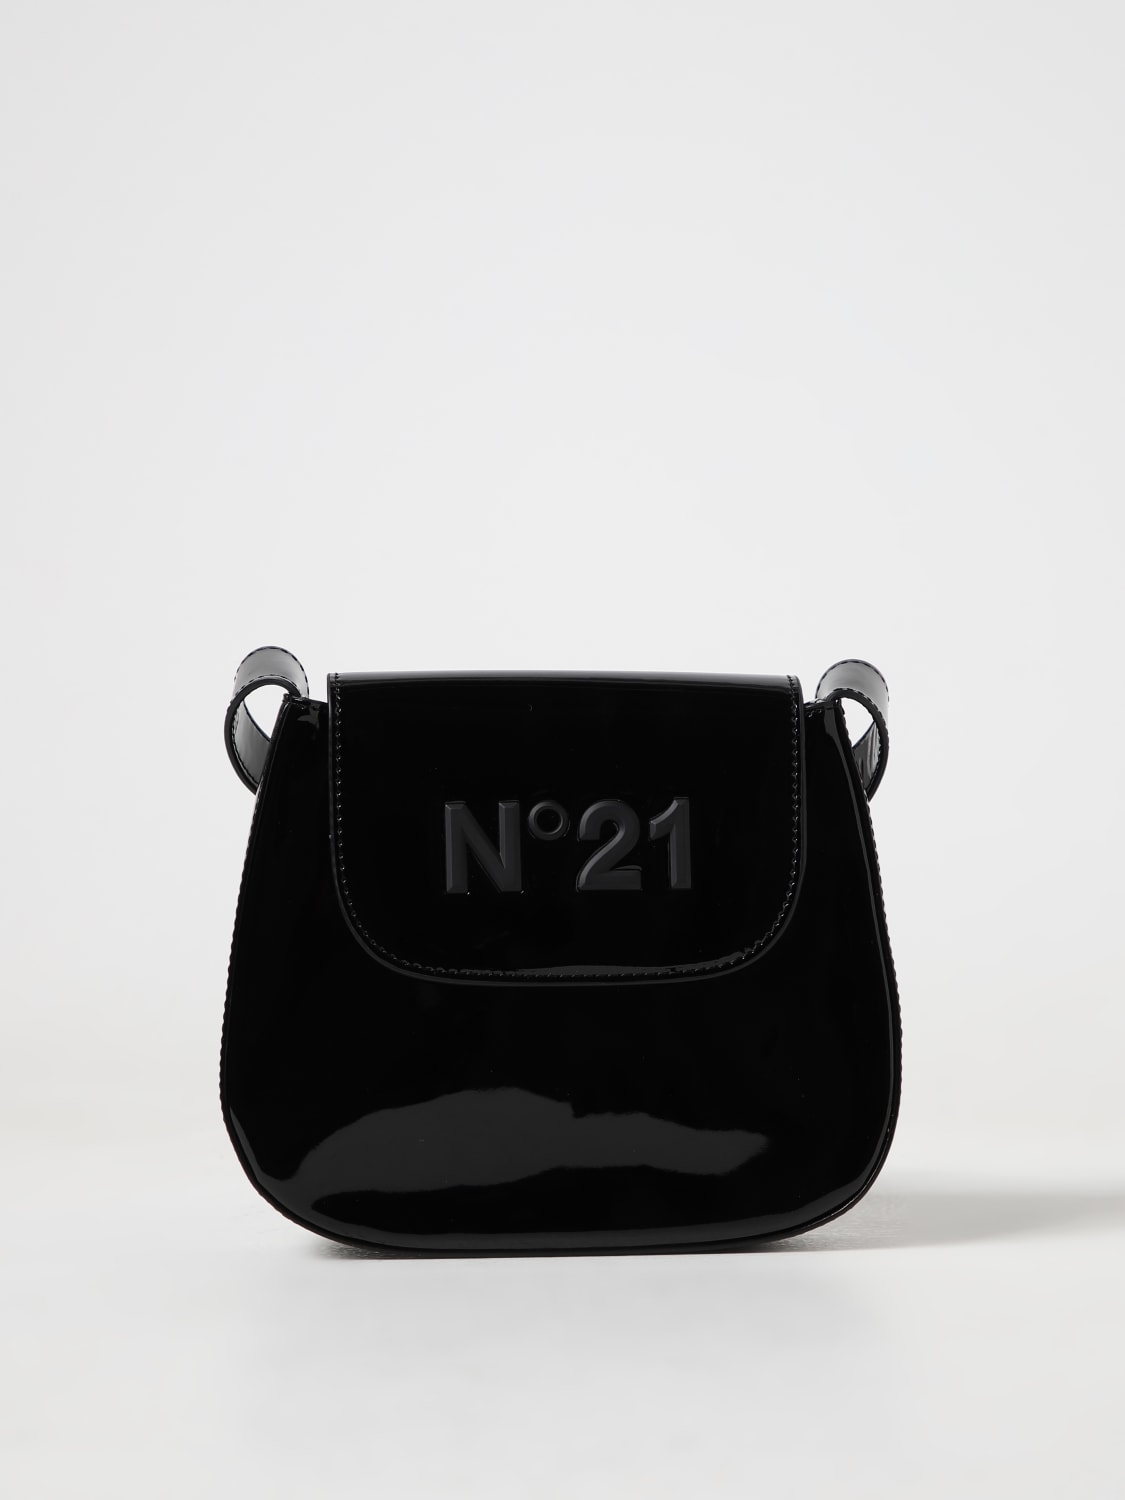 N° 21: N°21 patent leather bag with logo - Black | N° 21 clutch N21925N0244  online at GIGLIO.COM